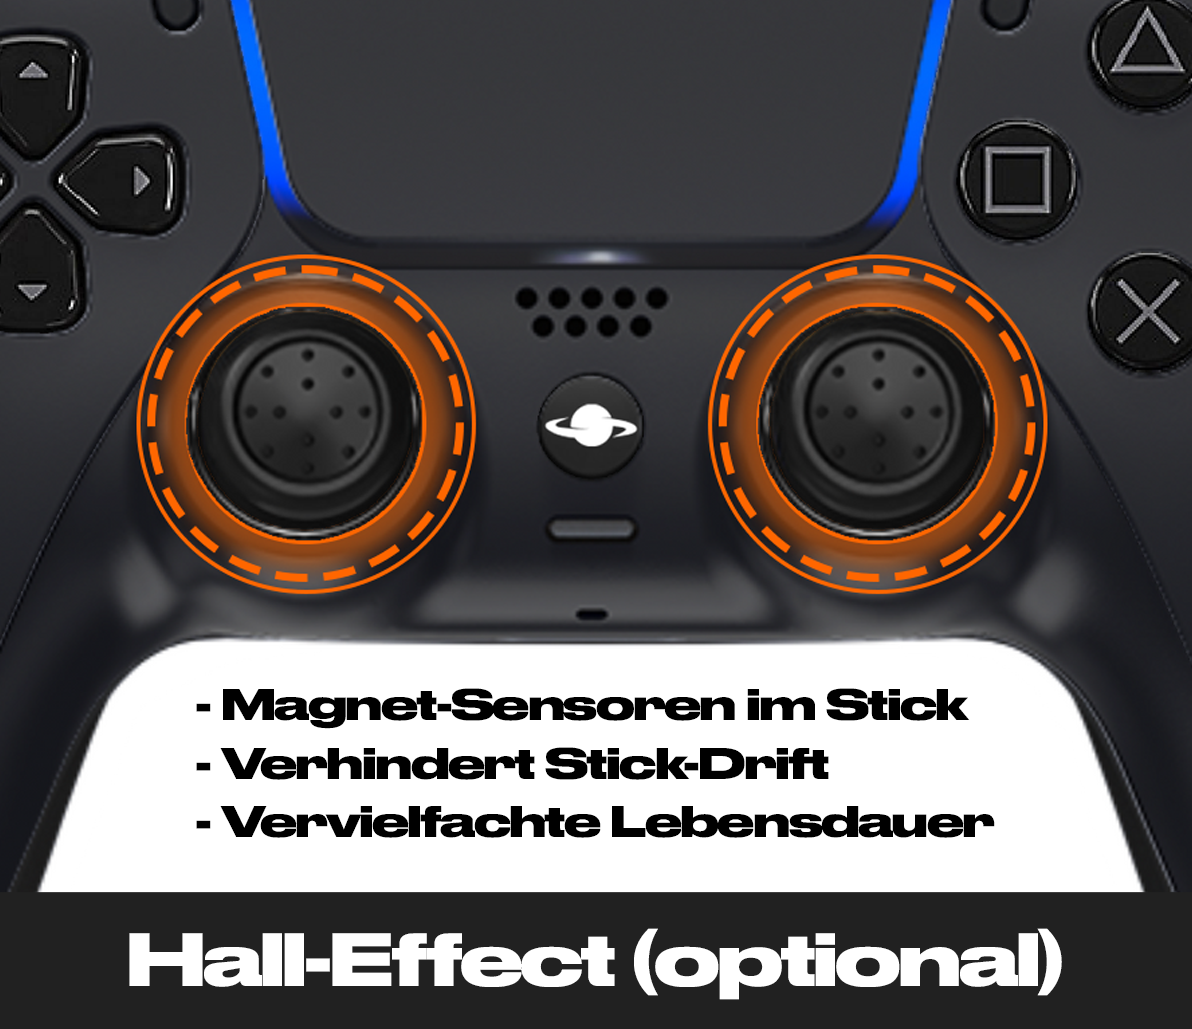 PS5 Custom Controller 'MARINER'